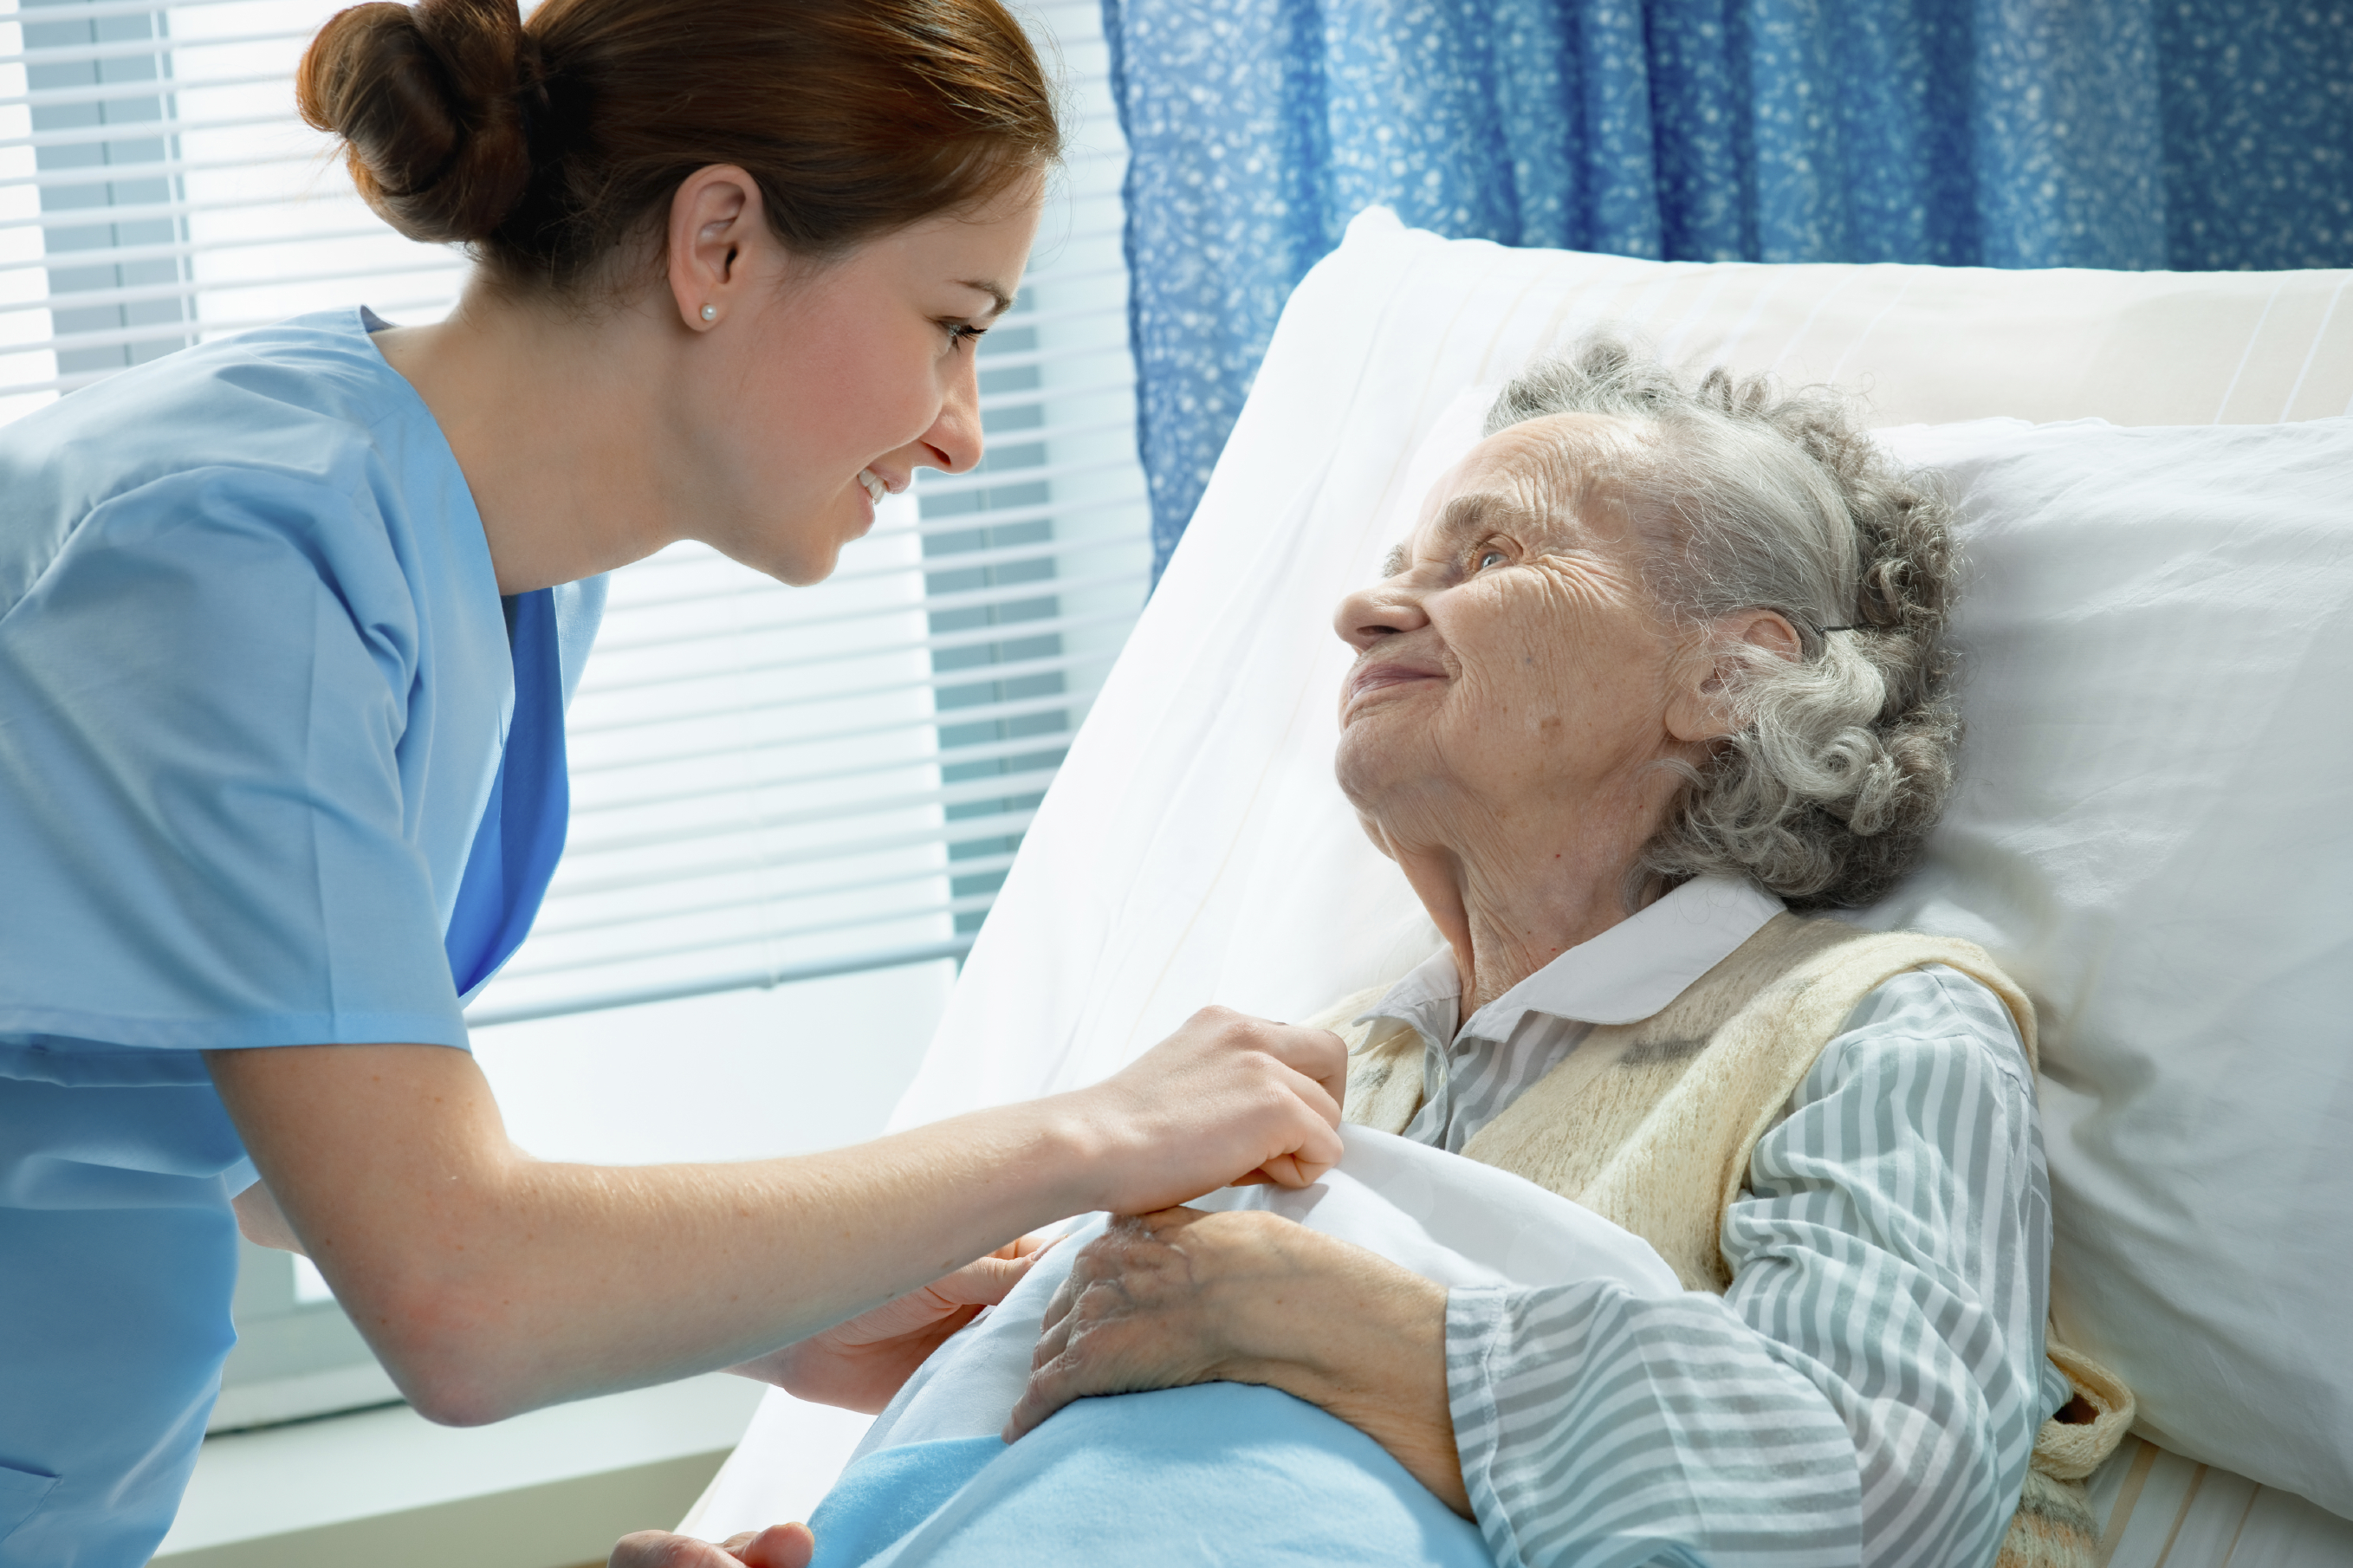 Nurse bedside with an elderly patient.